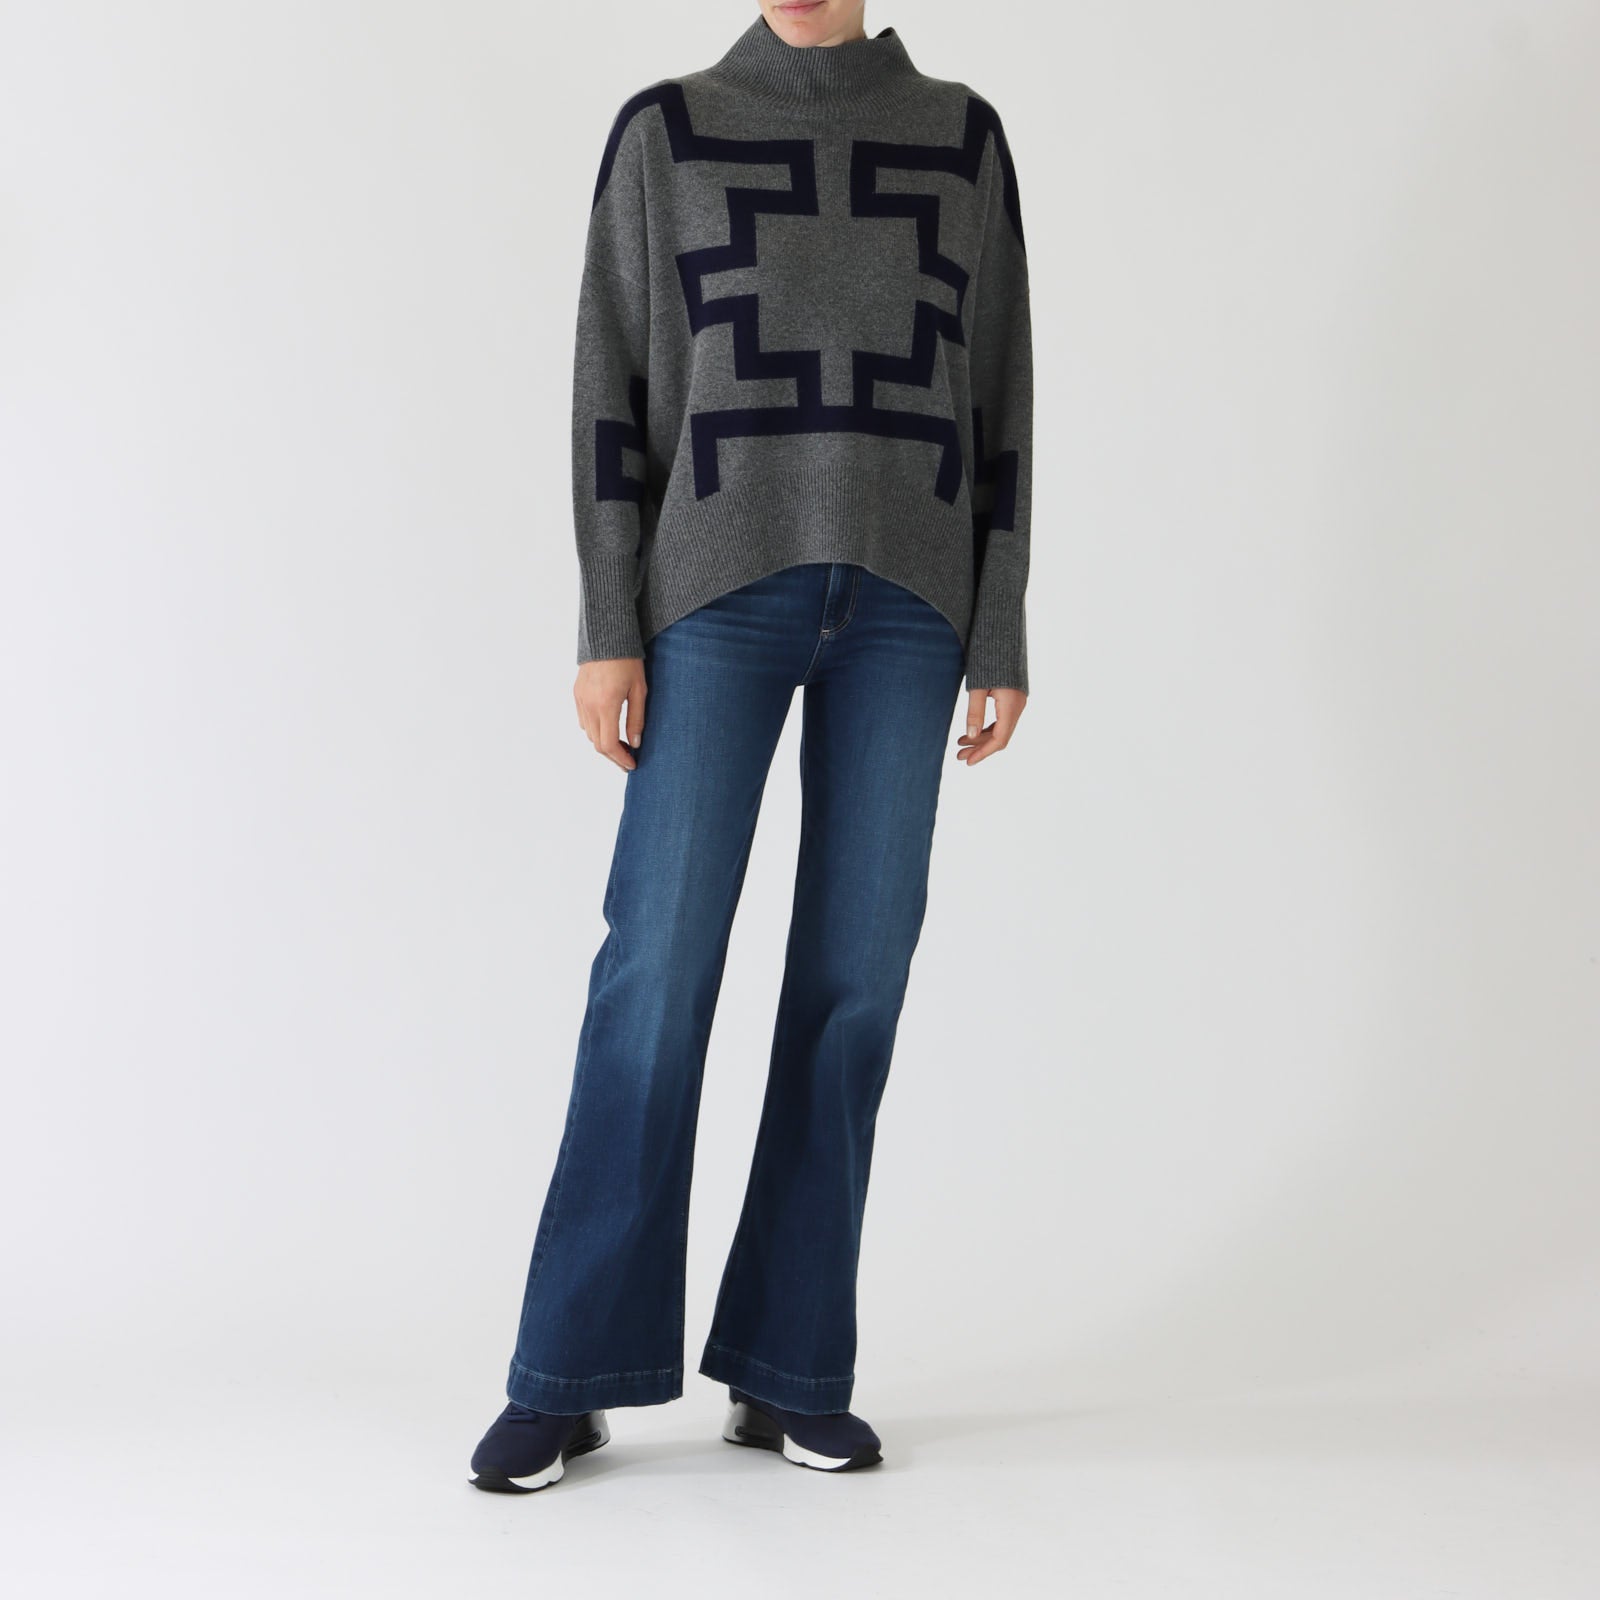 Iwar Charbon & Marine Cashmere Blend Sweater